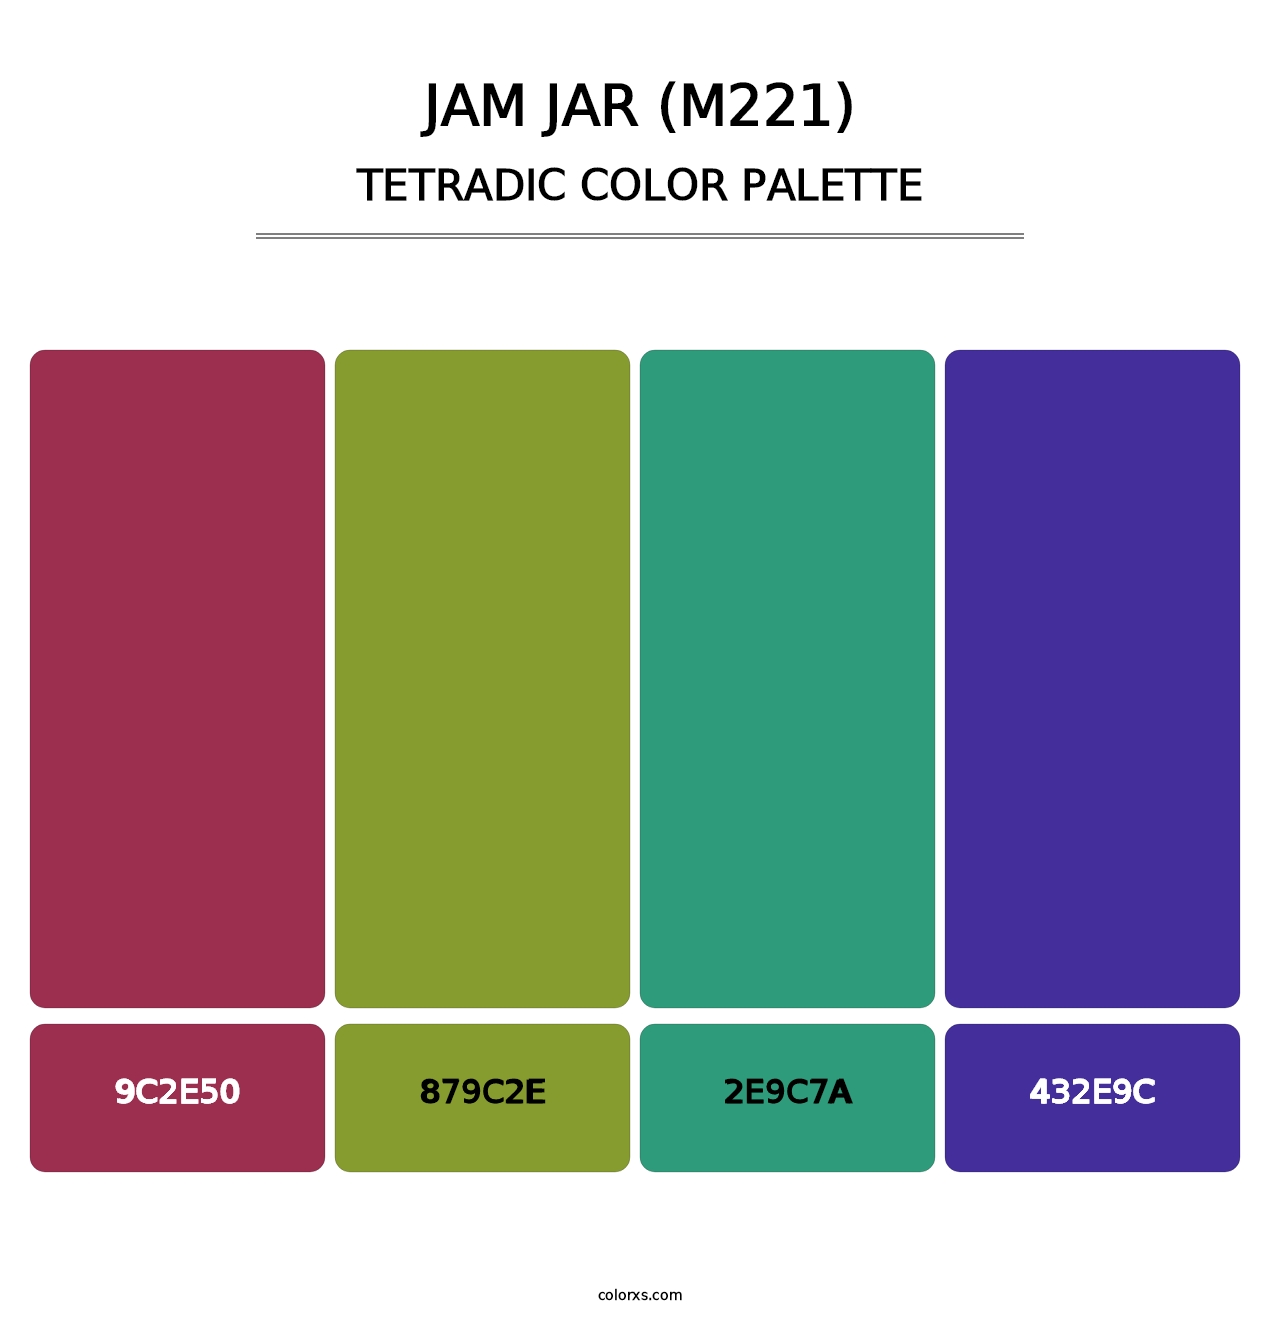 Jam Jar (M221) - Tetradic Color Palette